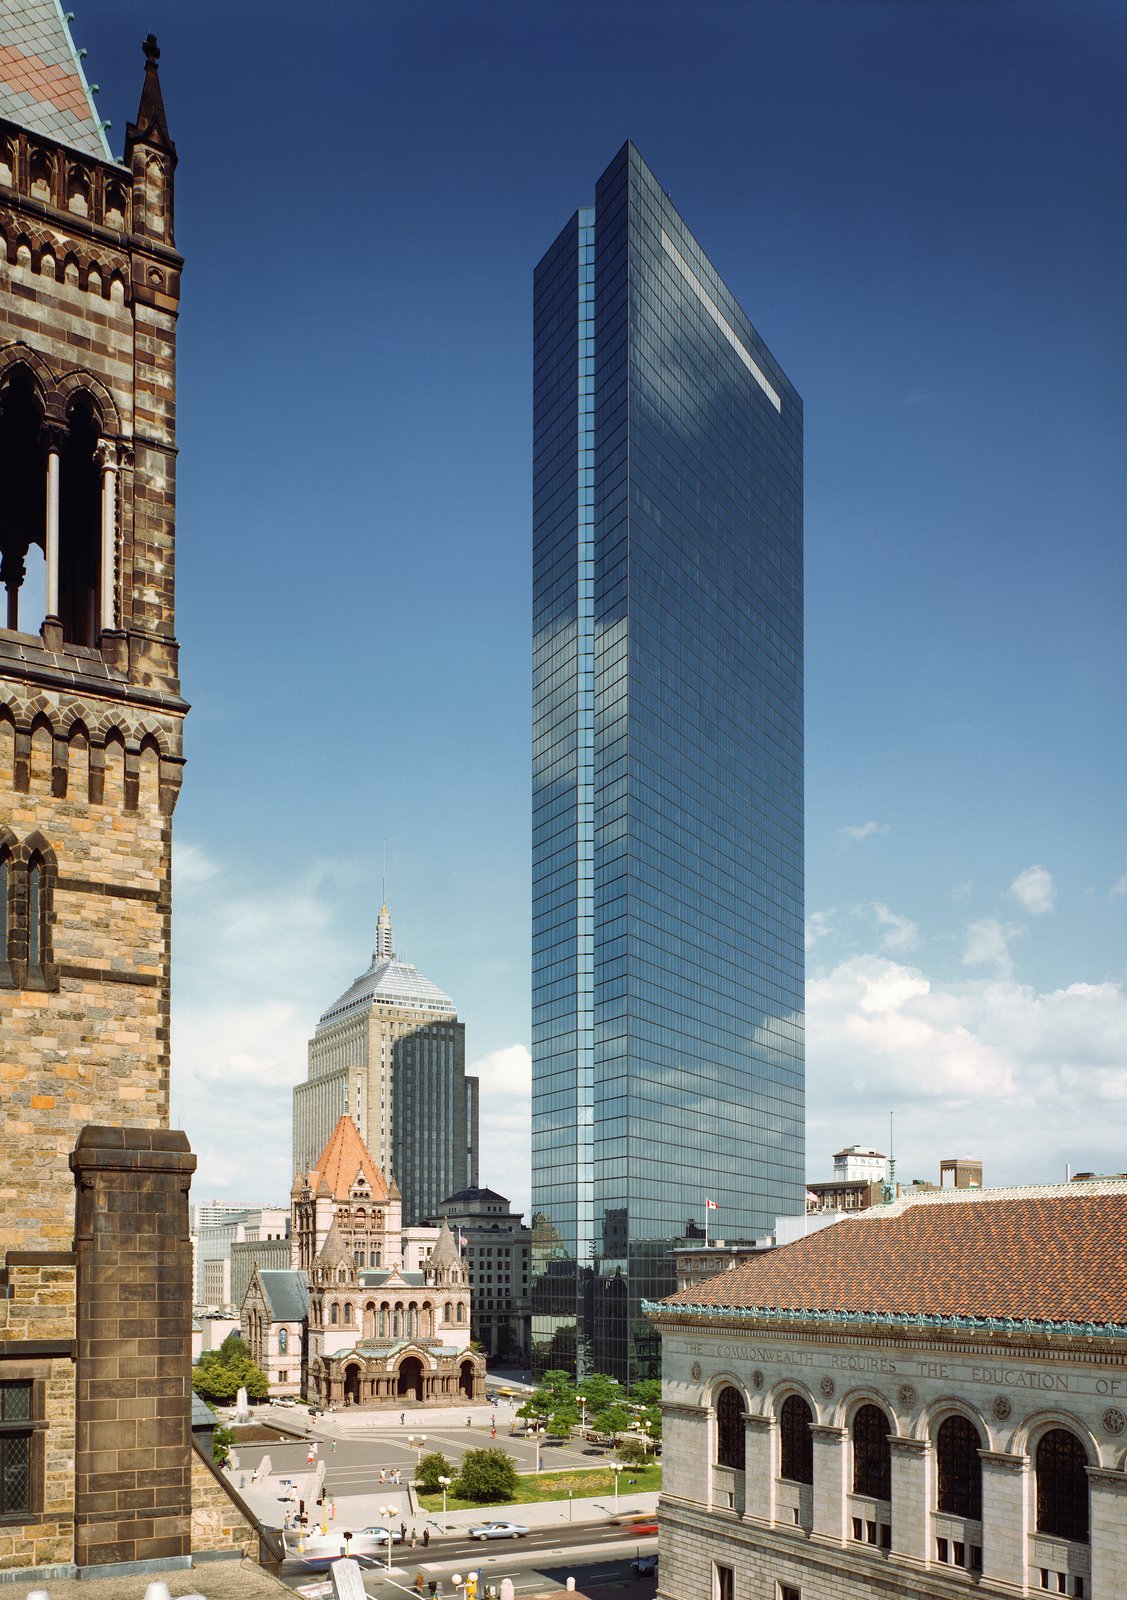 「John Hancock Tower」の画像検索結果